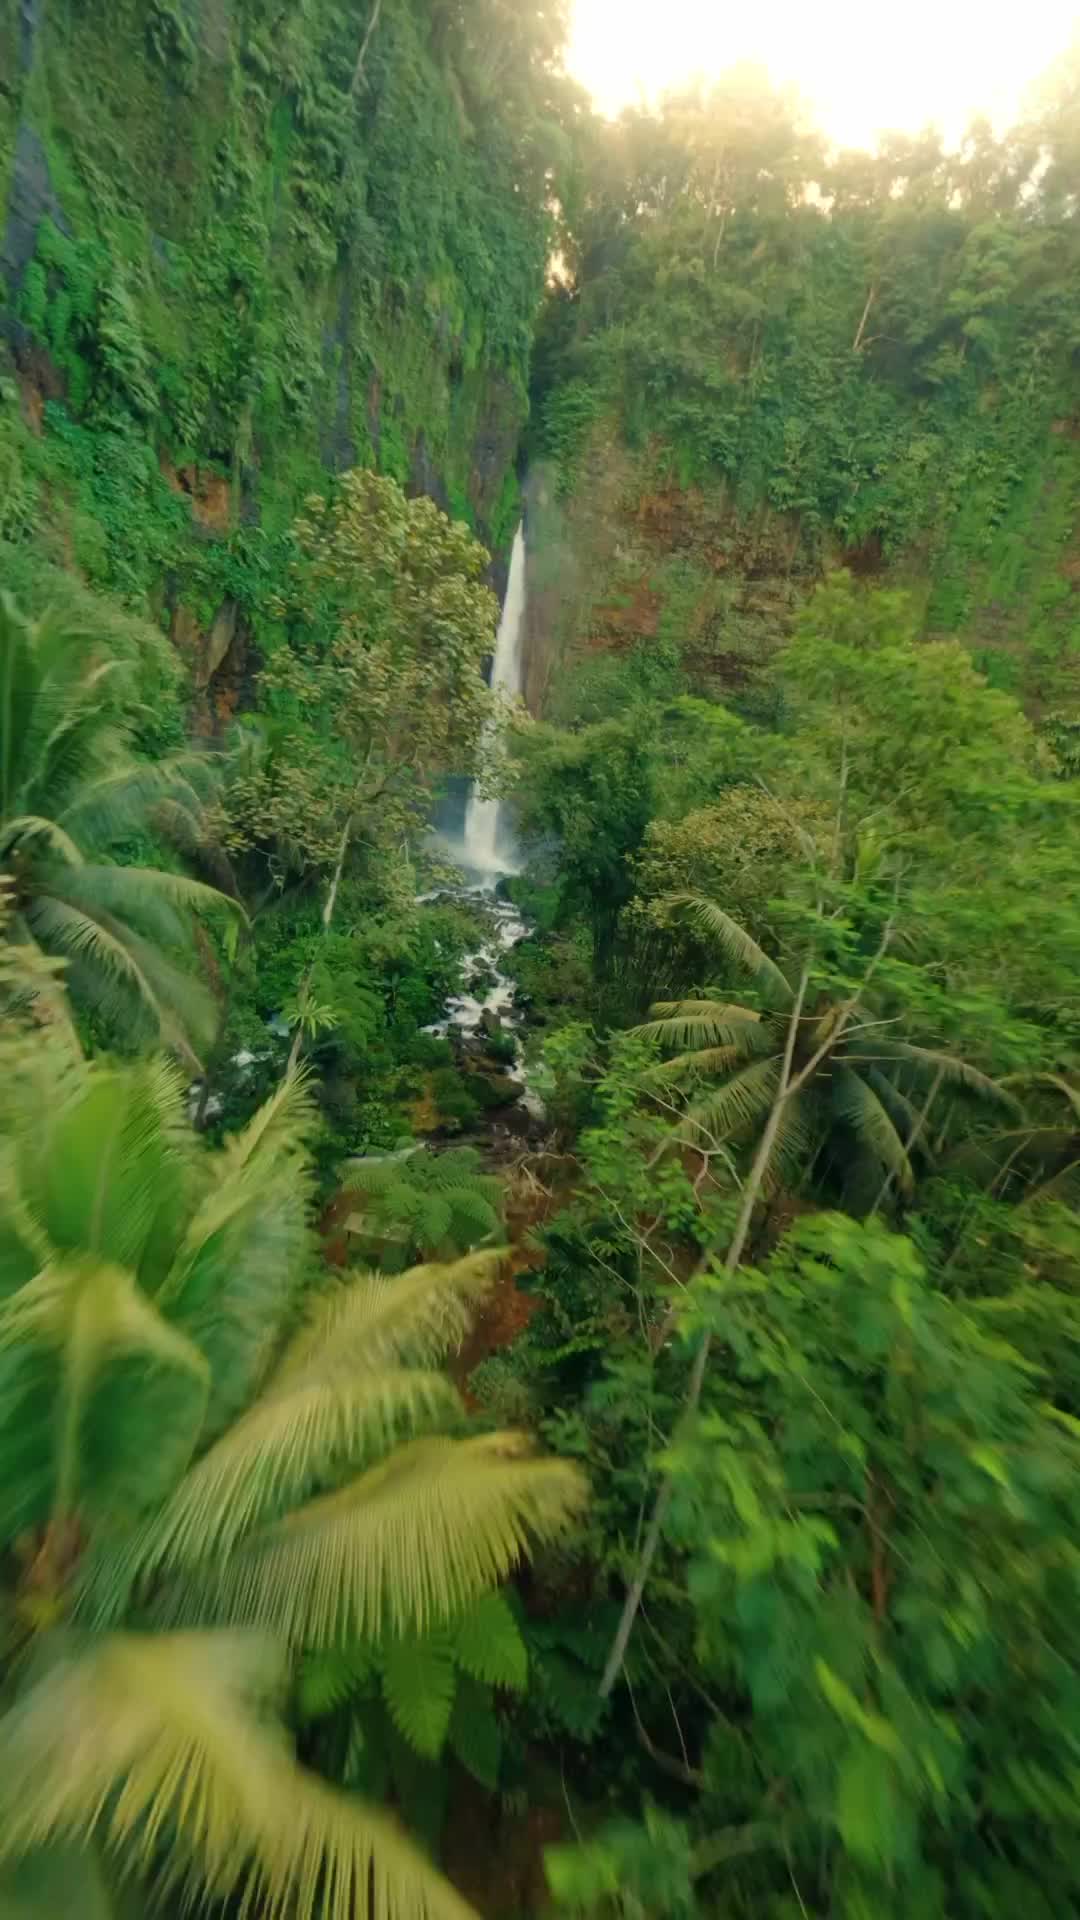 Drone Shower at Kapas Biru Waterfall, Indonesia